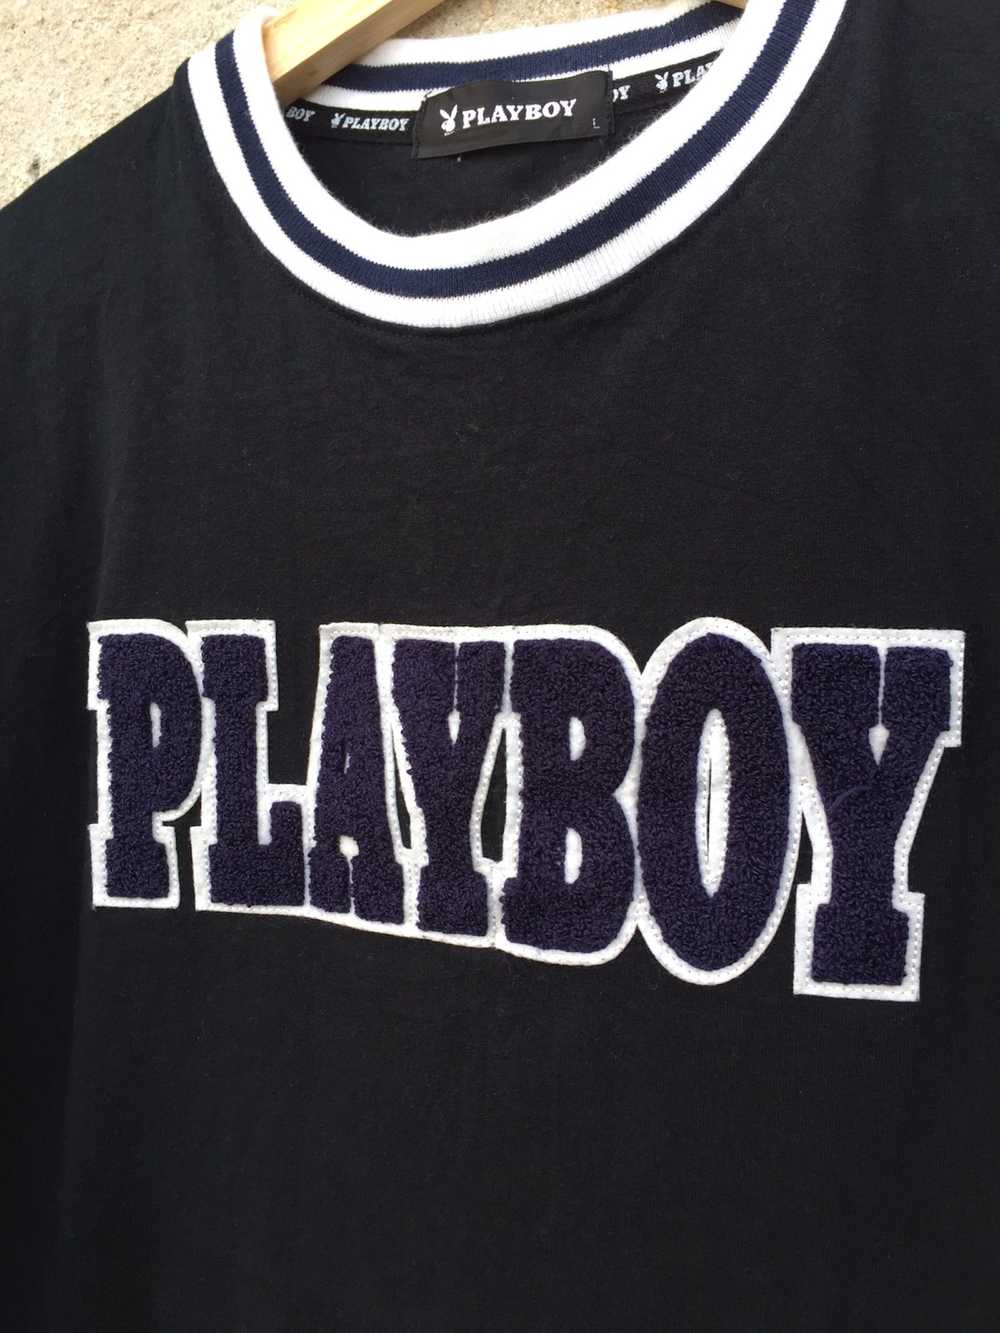 Playboy Playboy with big logo short sleeve t shir… - image 3